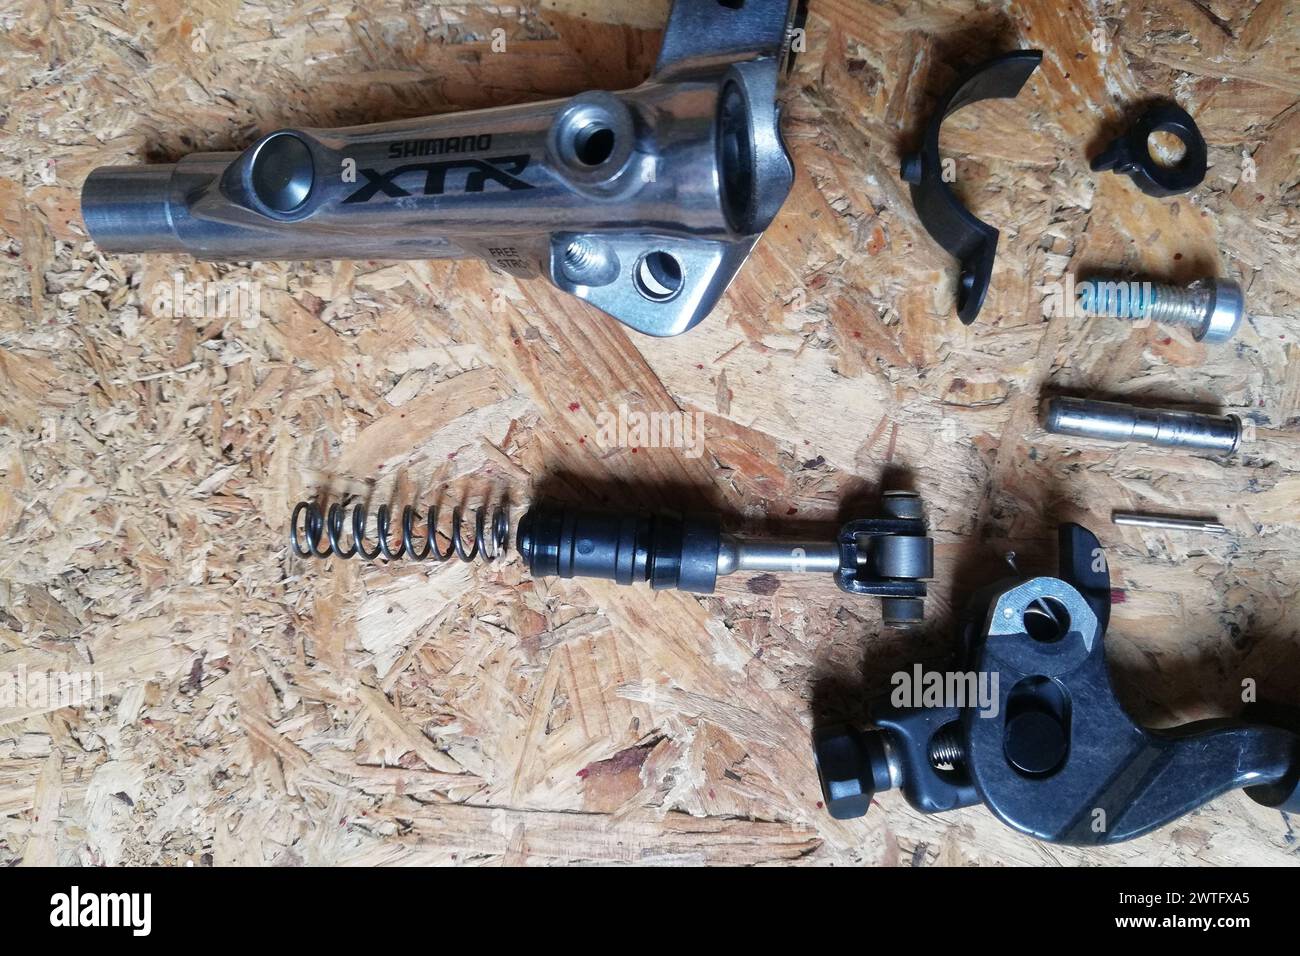 Top view of Shimano XTR mountain bike brake lever Stock Photo